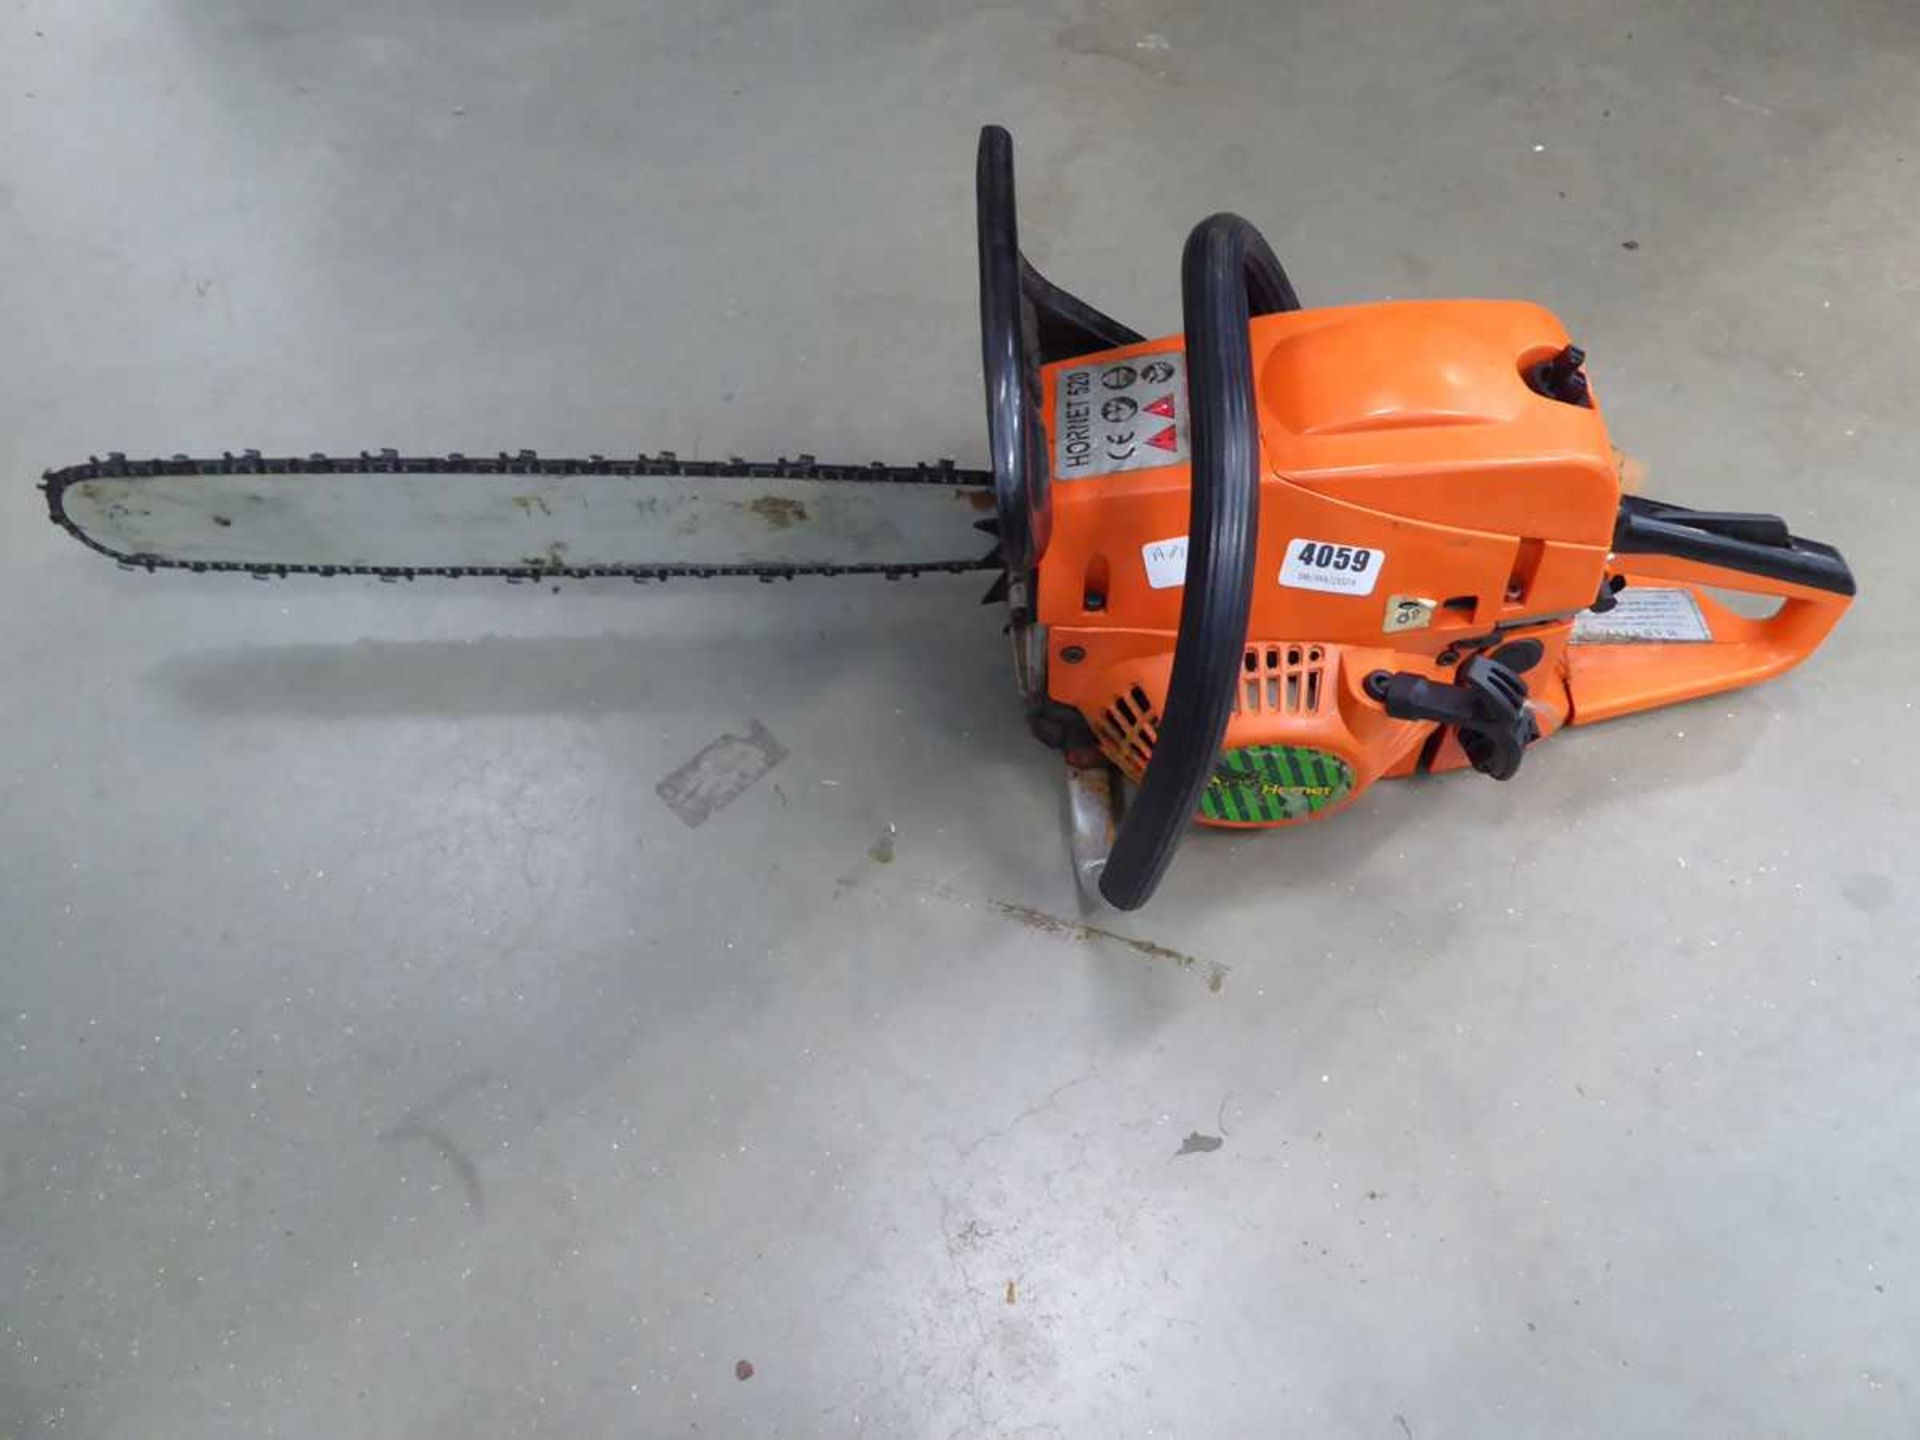 Hornet orange petrol powered chainsaw